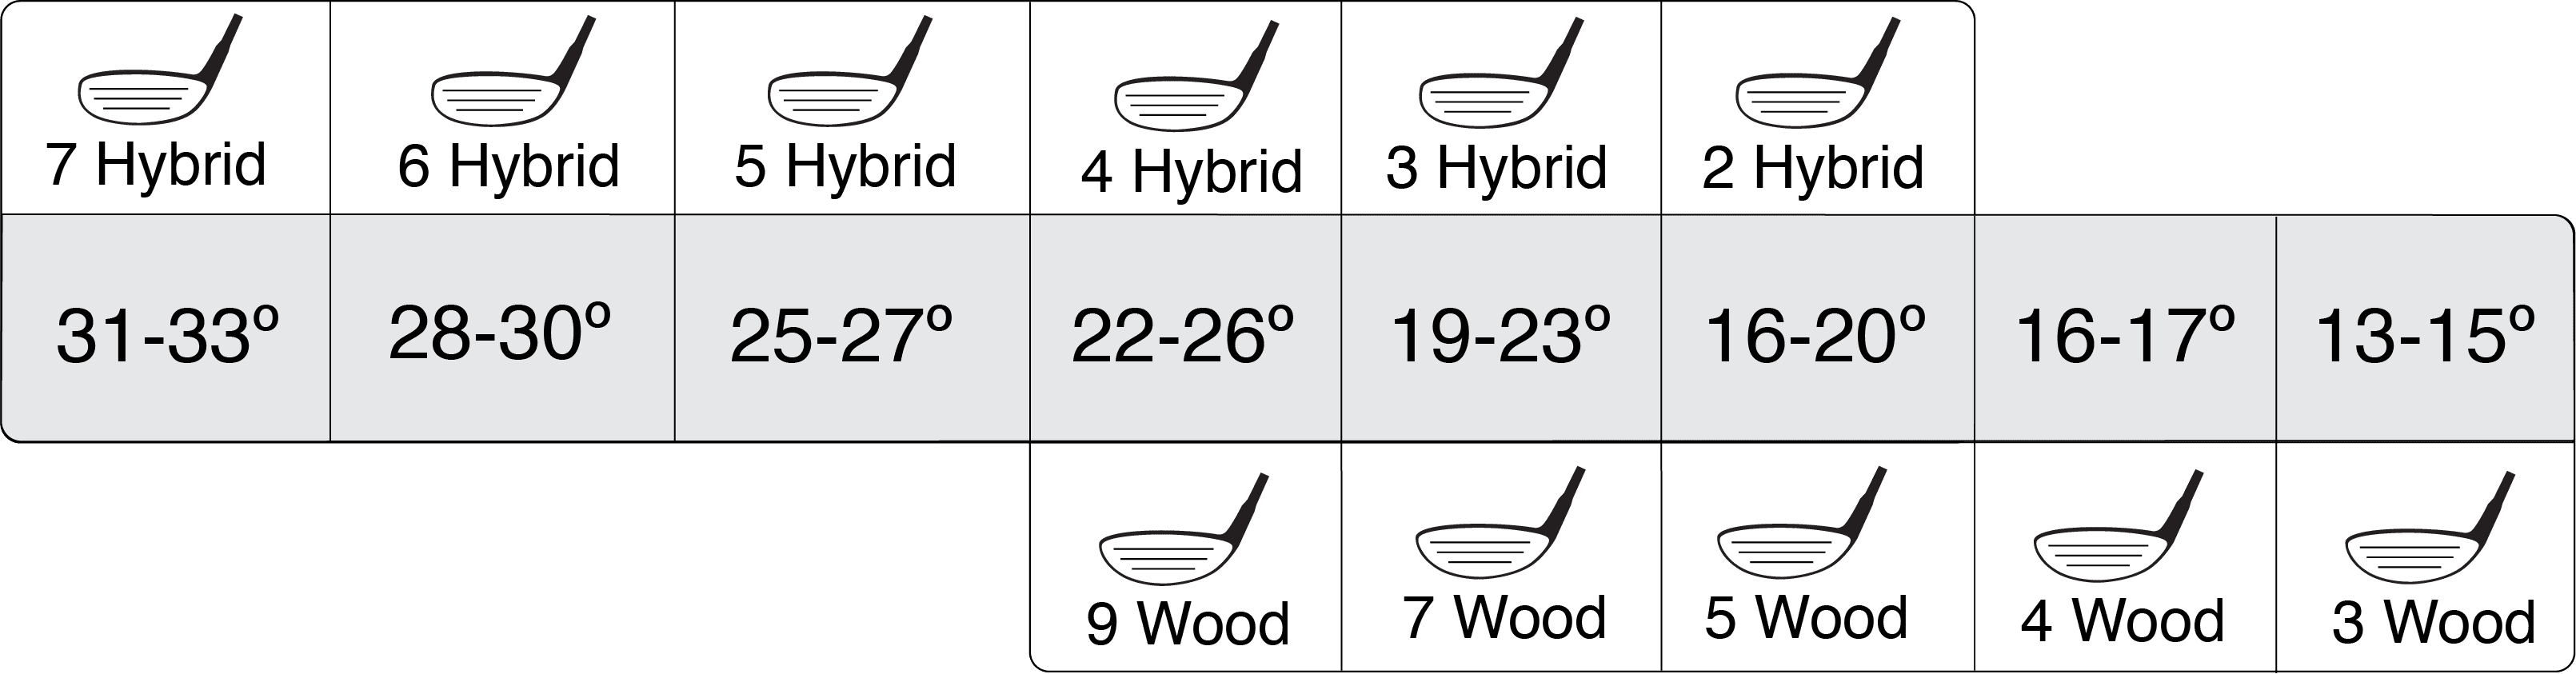 Hybrid Vs Irons Chart